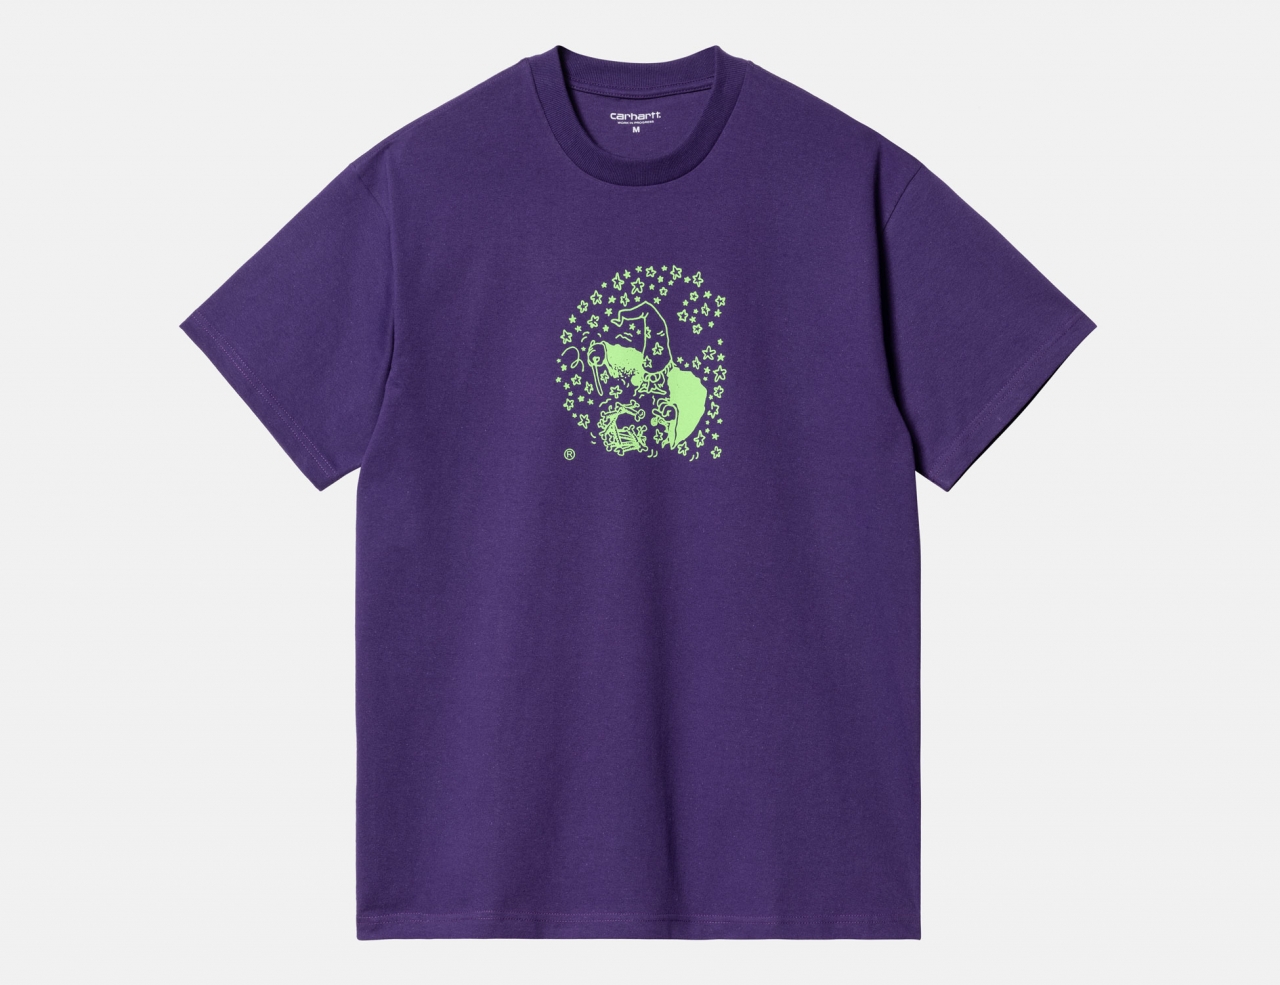 Carhartt WIP S/S Hocus Pocus T-Shirt - Tyrian/Green